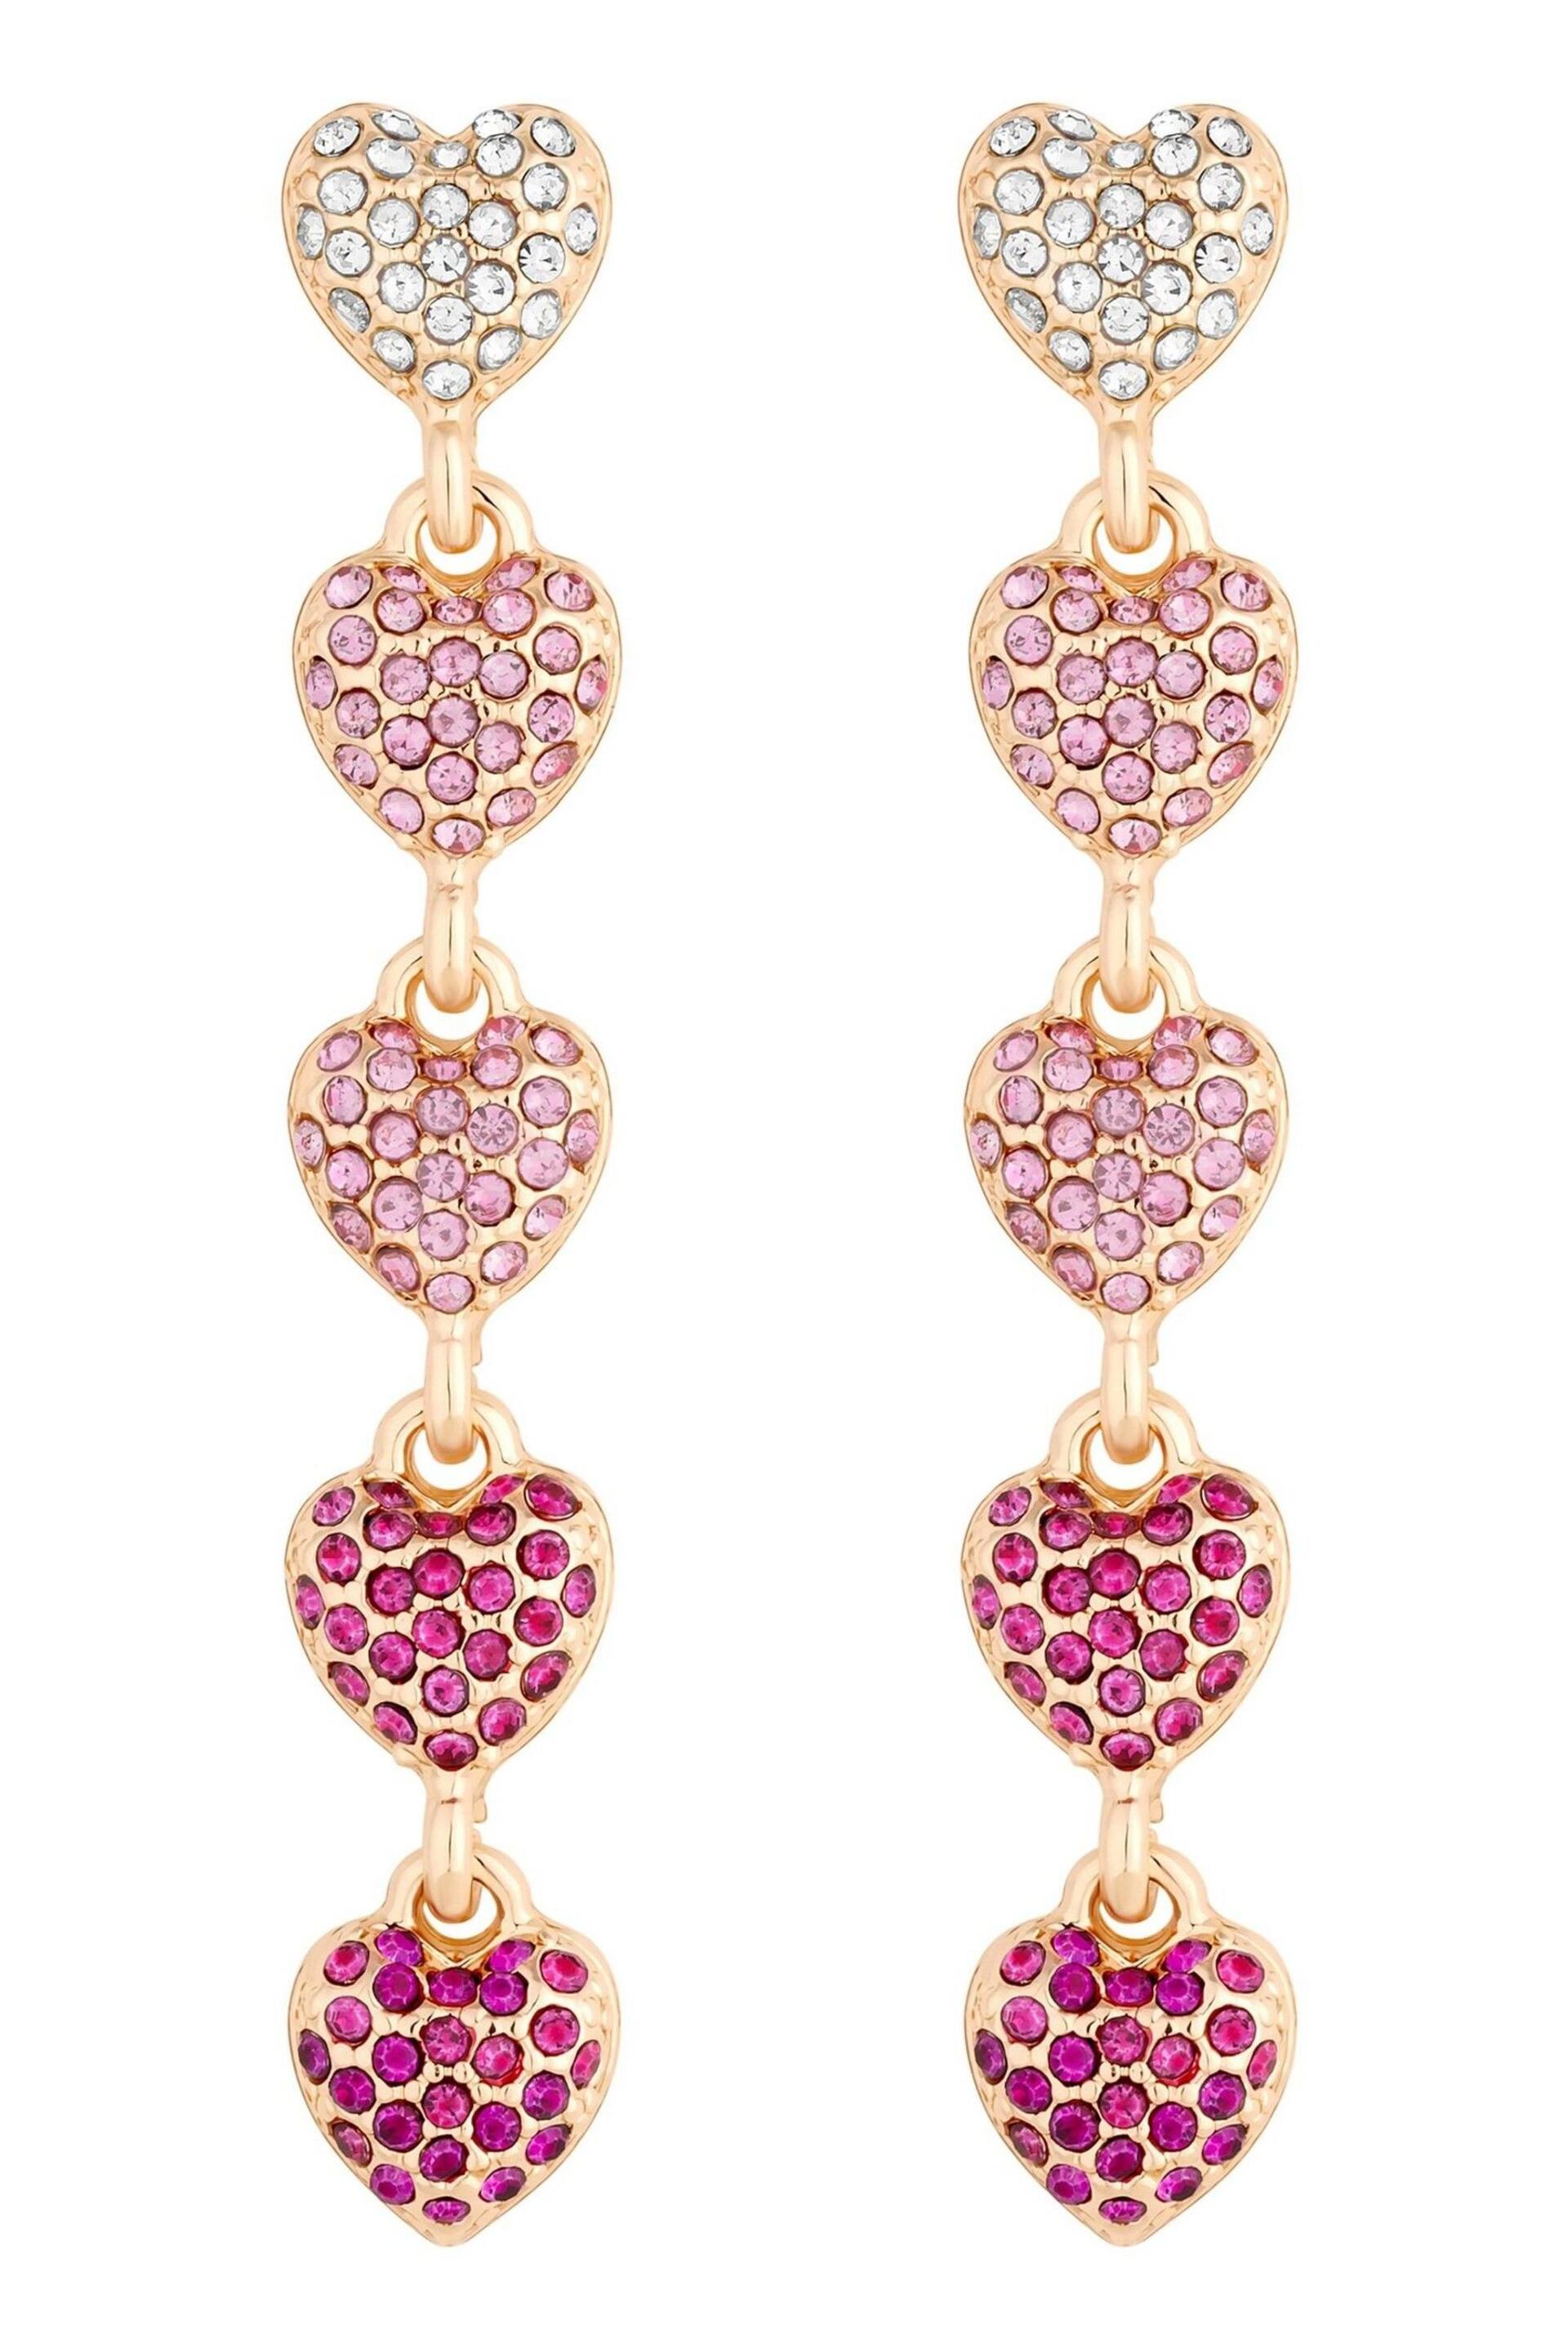 Lipsy Jewellery Pink Micro Pave Tonal Drop Earrings - Image 1 of 2